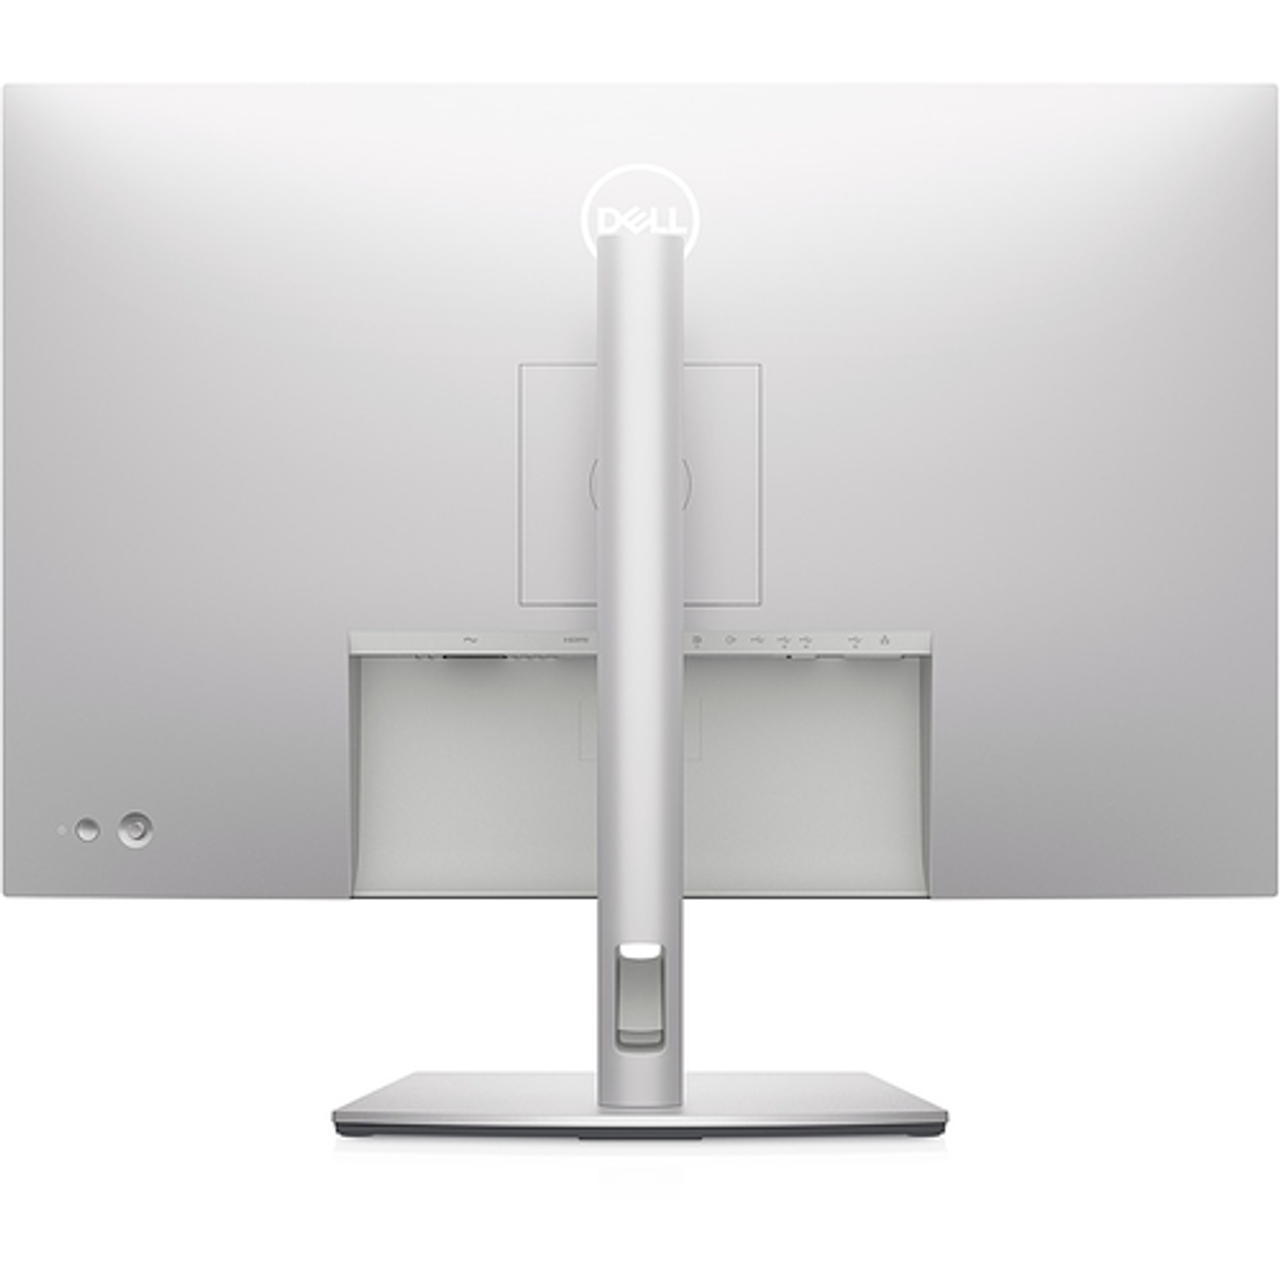 Dell - UltraSharp 30 LCD Monitor (DisplayPort USB, HDMI) - Black, Silver